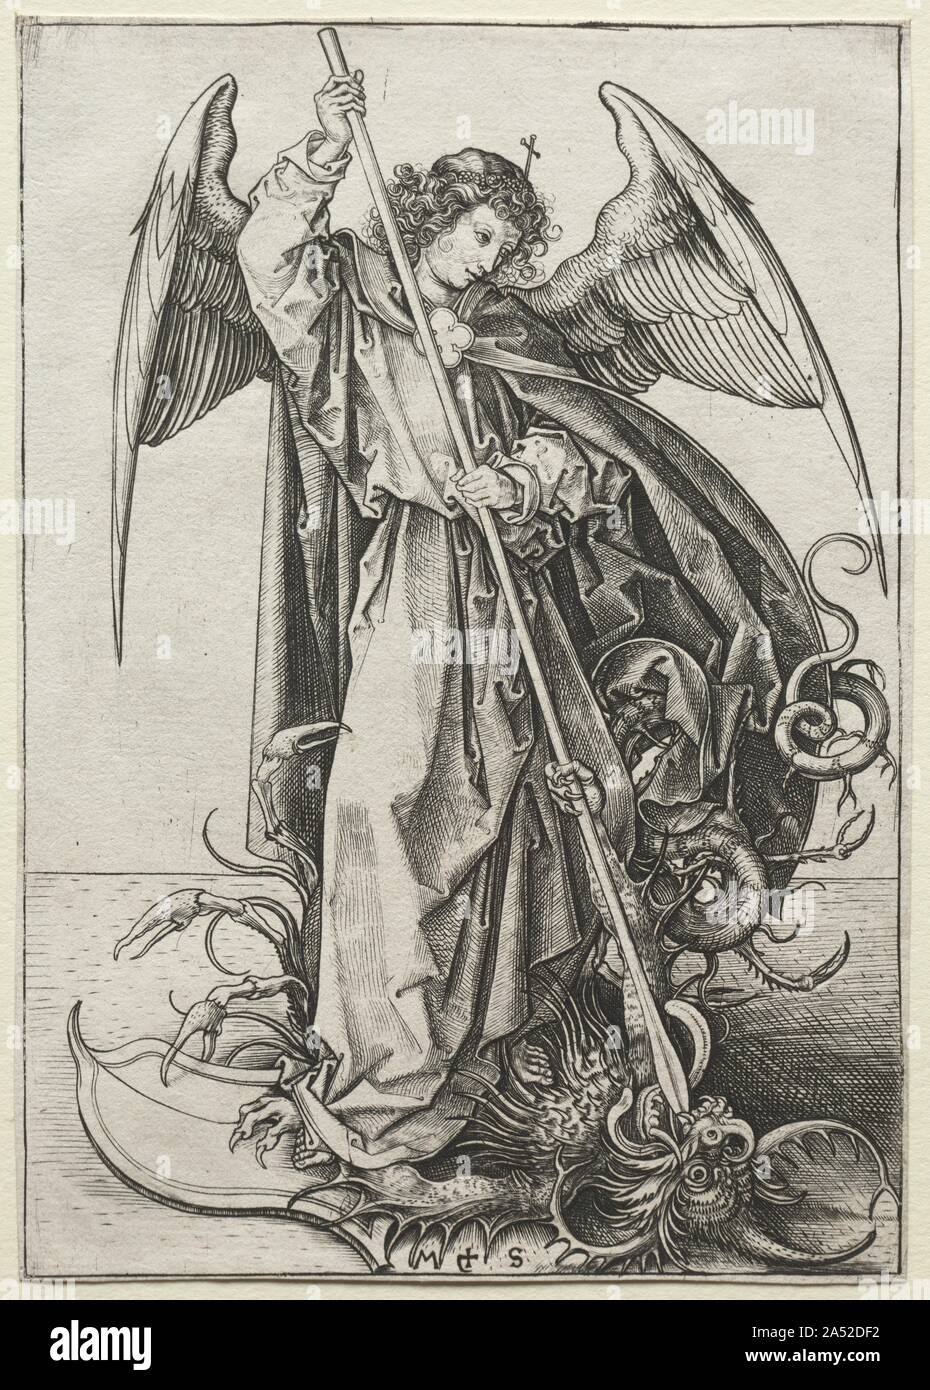 The Archangel Michael Piercing the Dragon, c. 1475. Stock Photo